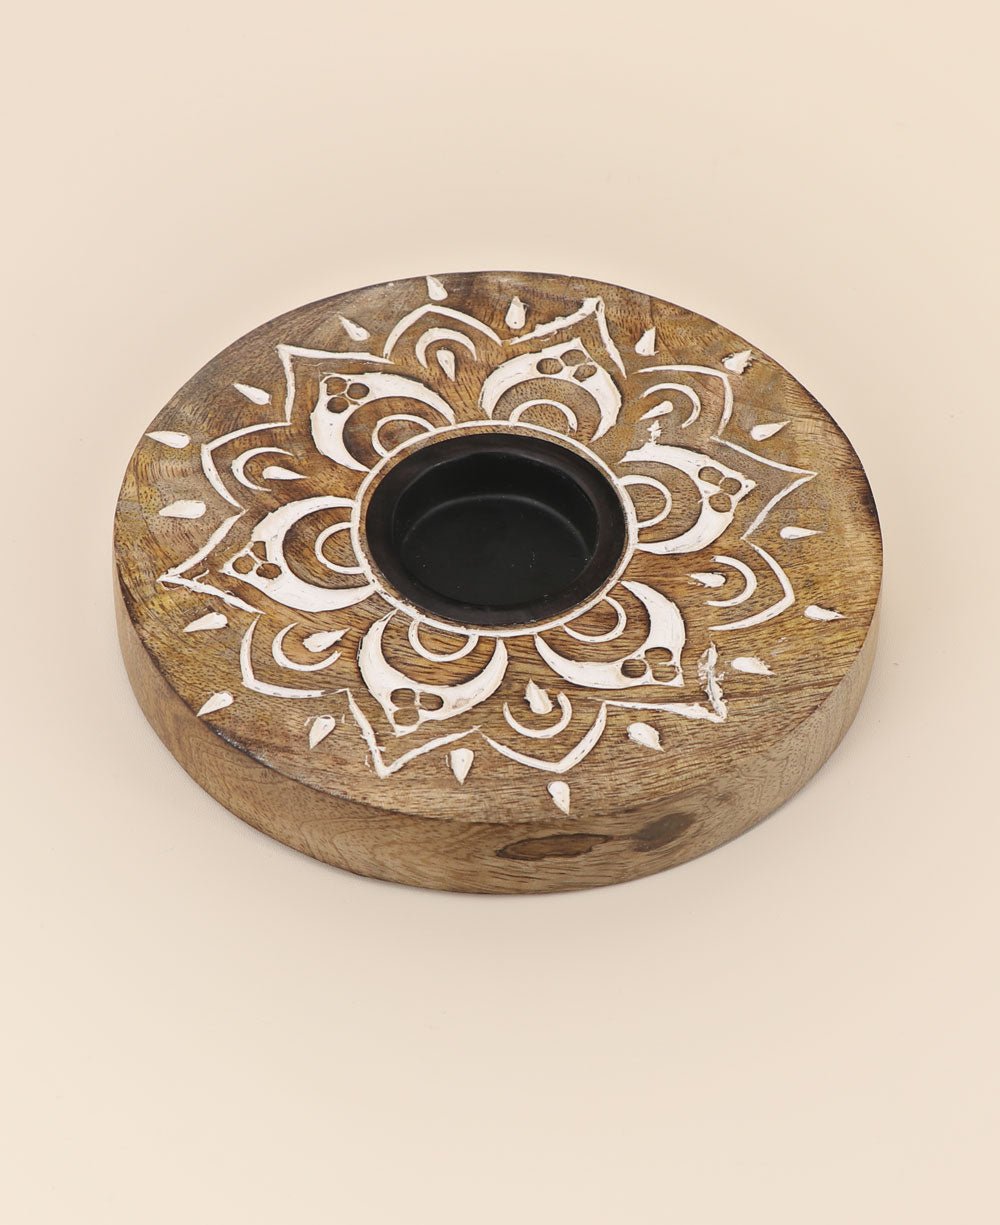 Fairtrade Hand Carved Wood Mandala Design Tea Light Holder - Candle Holders